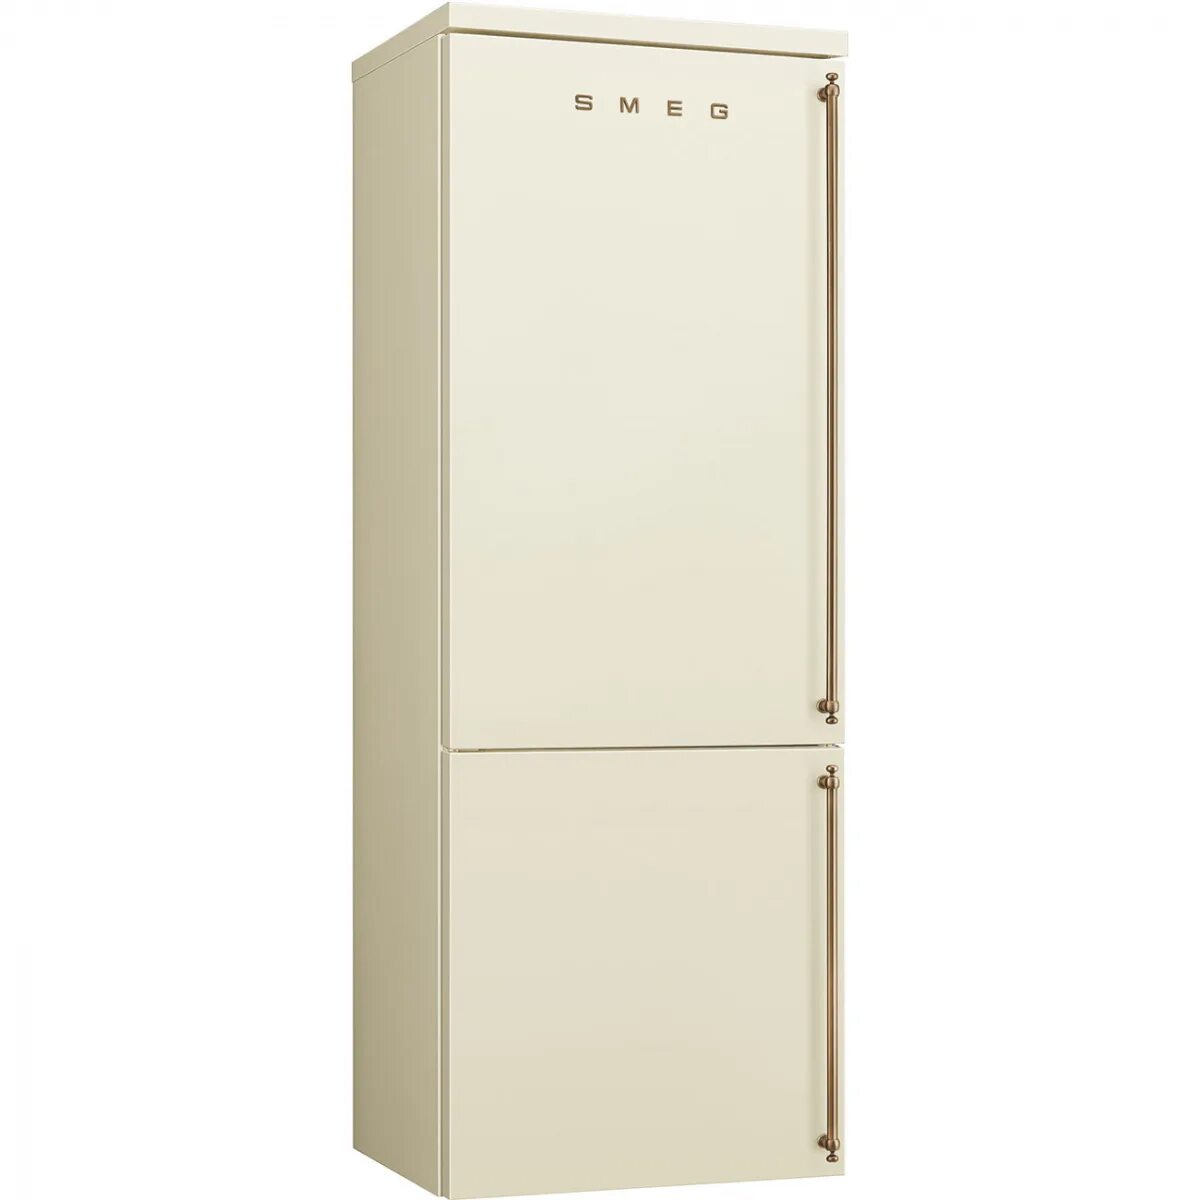 Холодильник Sharp SJ-xe59pmwh. Холодильник Smeg fa8003pos. Sharp SJ-xe55pmbe. Холодильники Smeg fa860p.